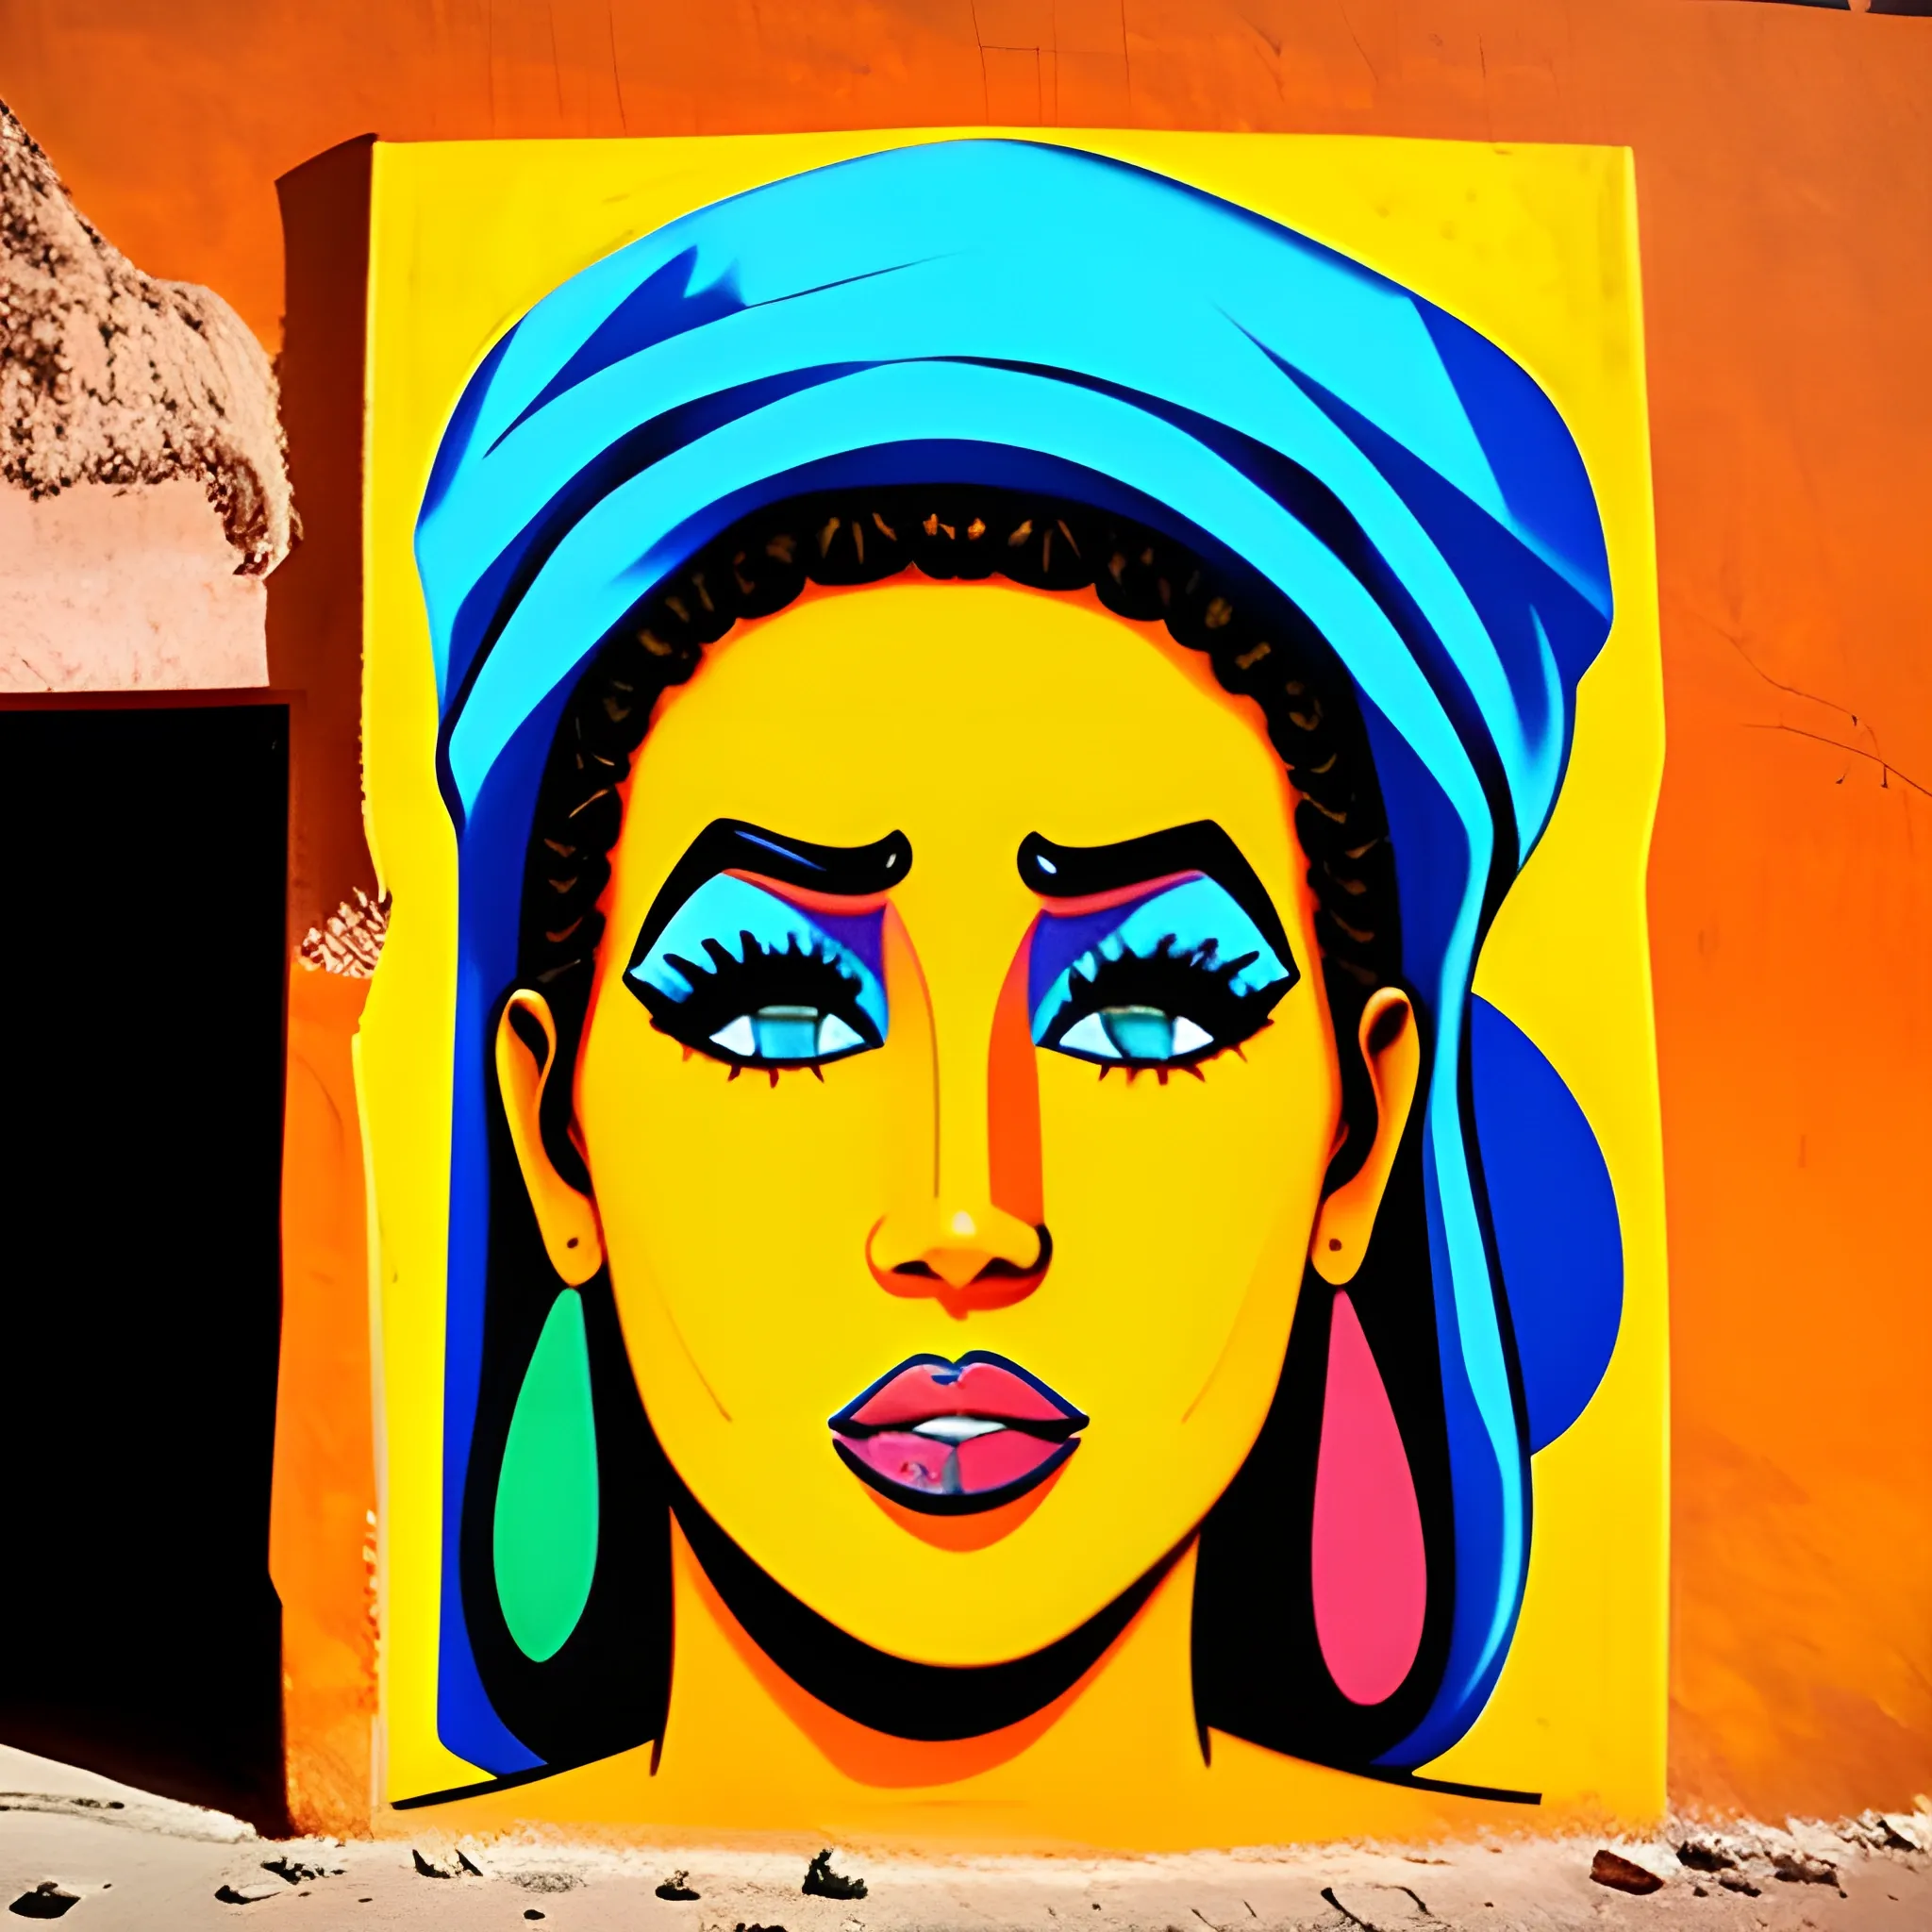 moroccan pop art street art character, Trippy